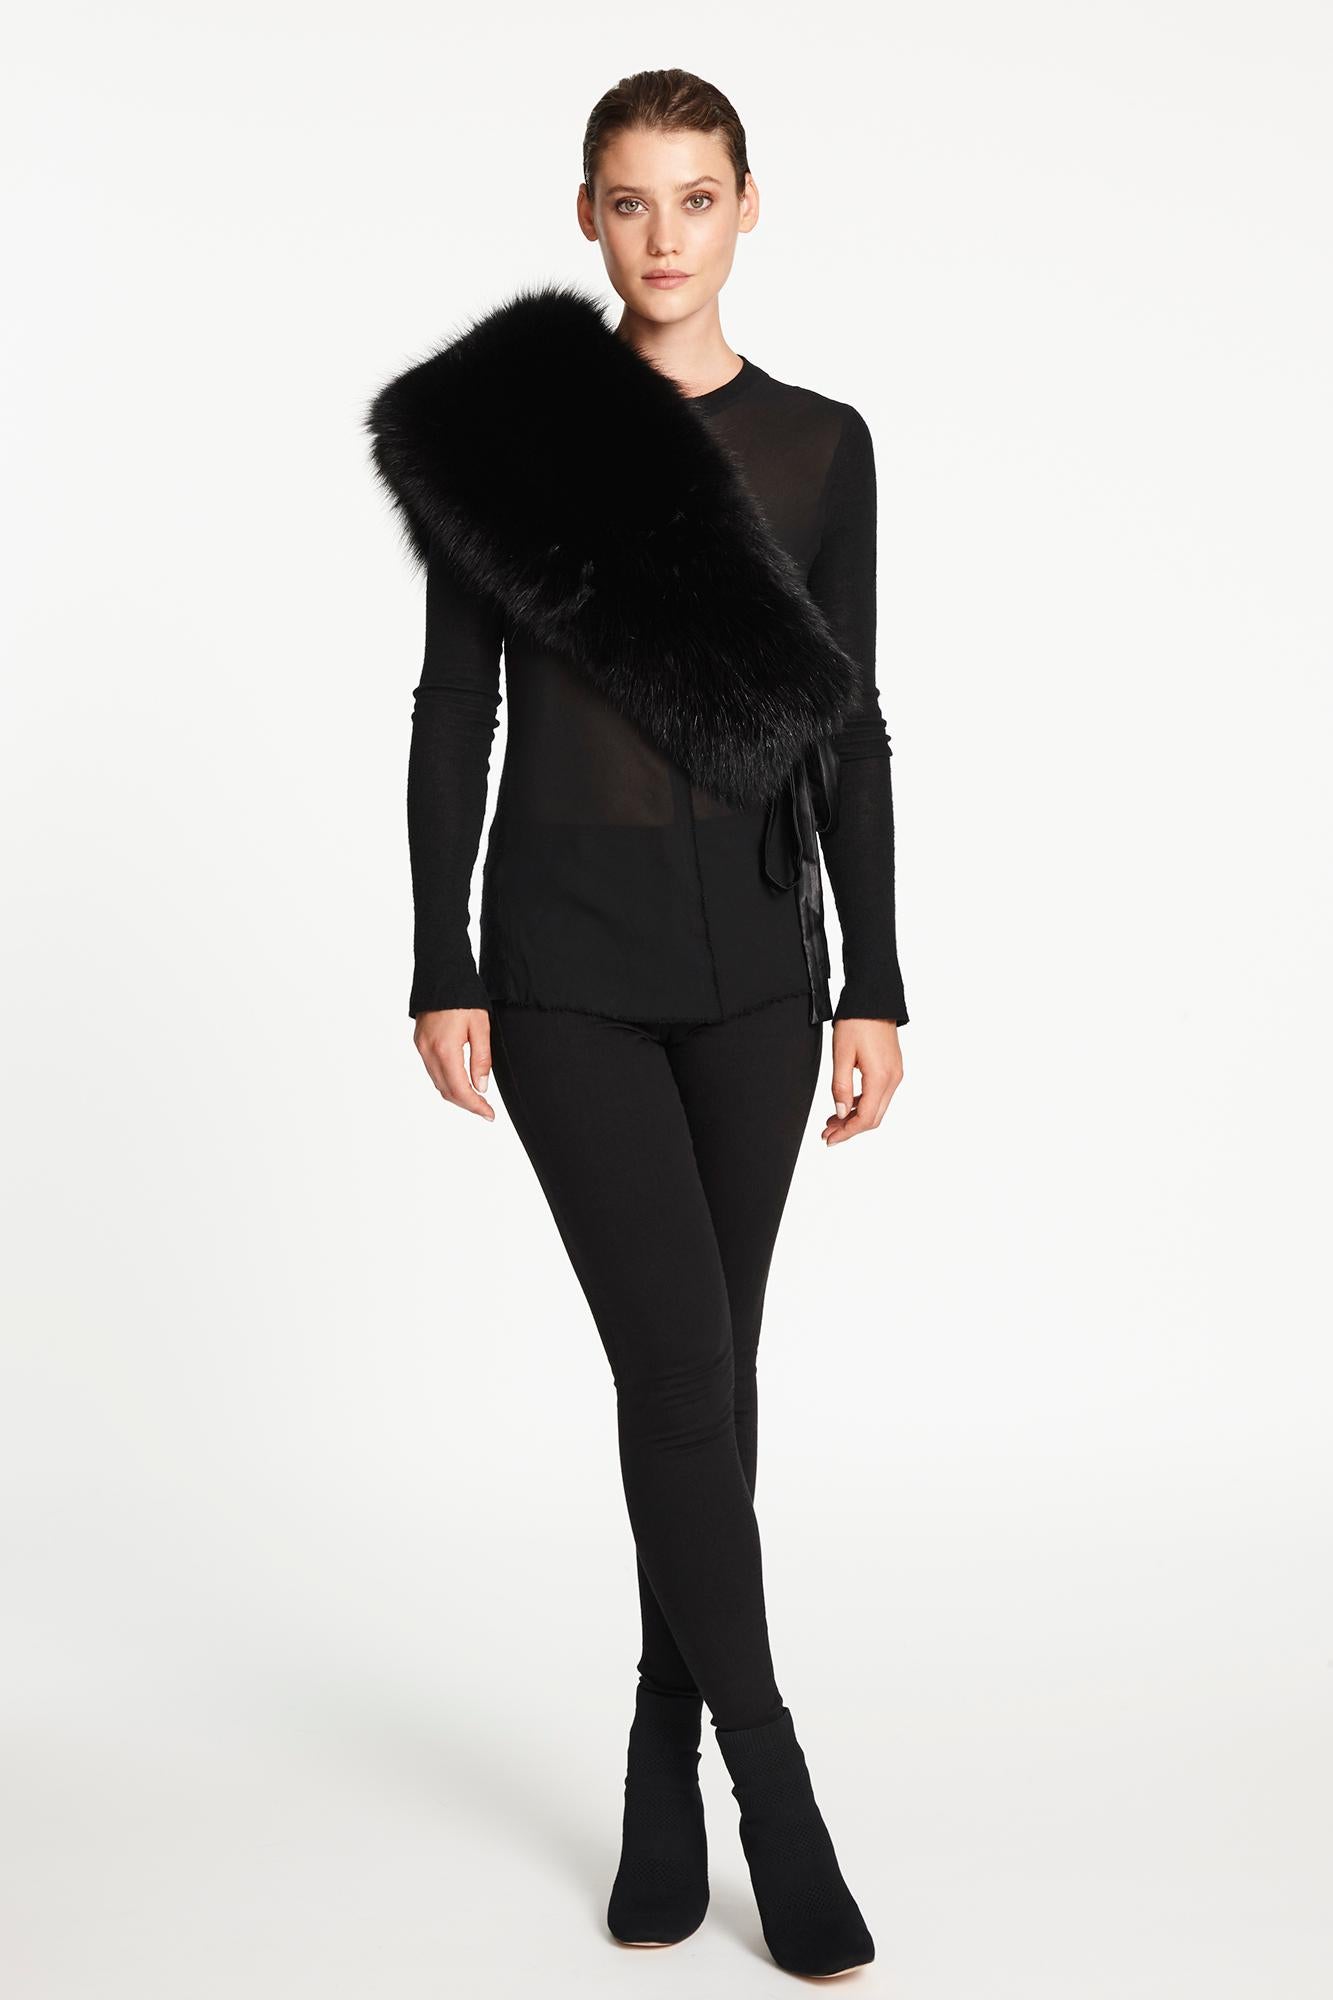 Verheyen London Chained Stole in Black Fox Fur & Chain - Brand New 12